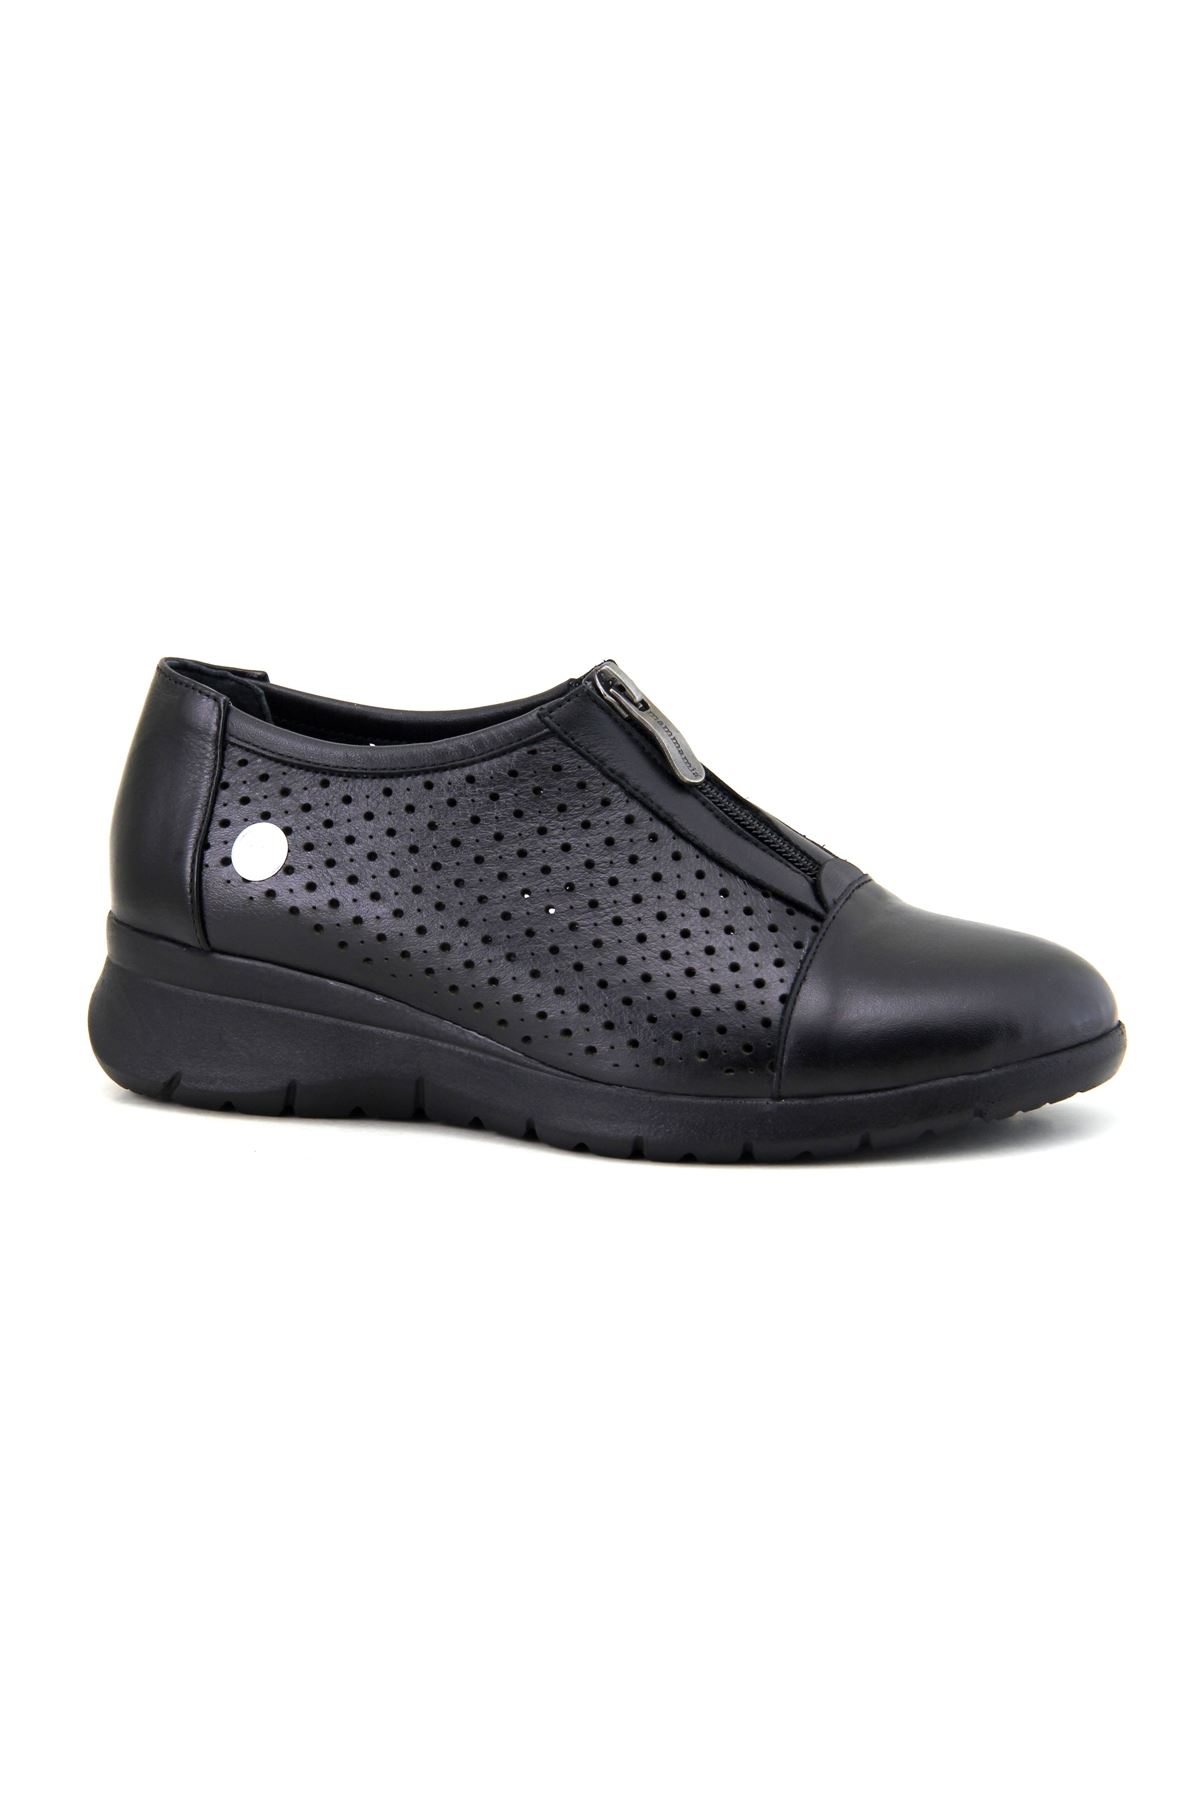 Mammamia D23YA-440 Hakiki Deri Kadın Ayakkabı - Siyah